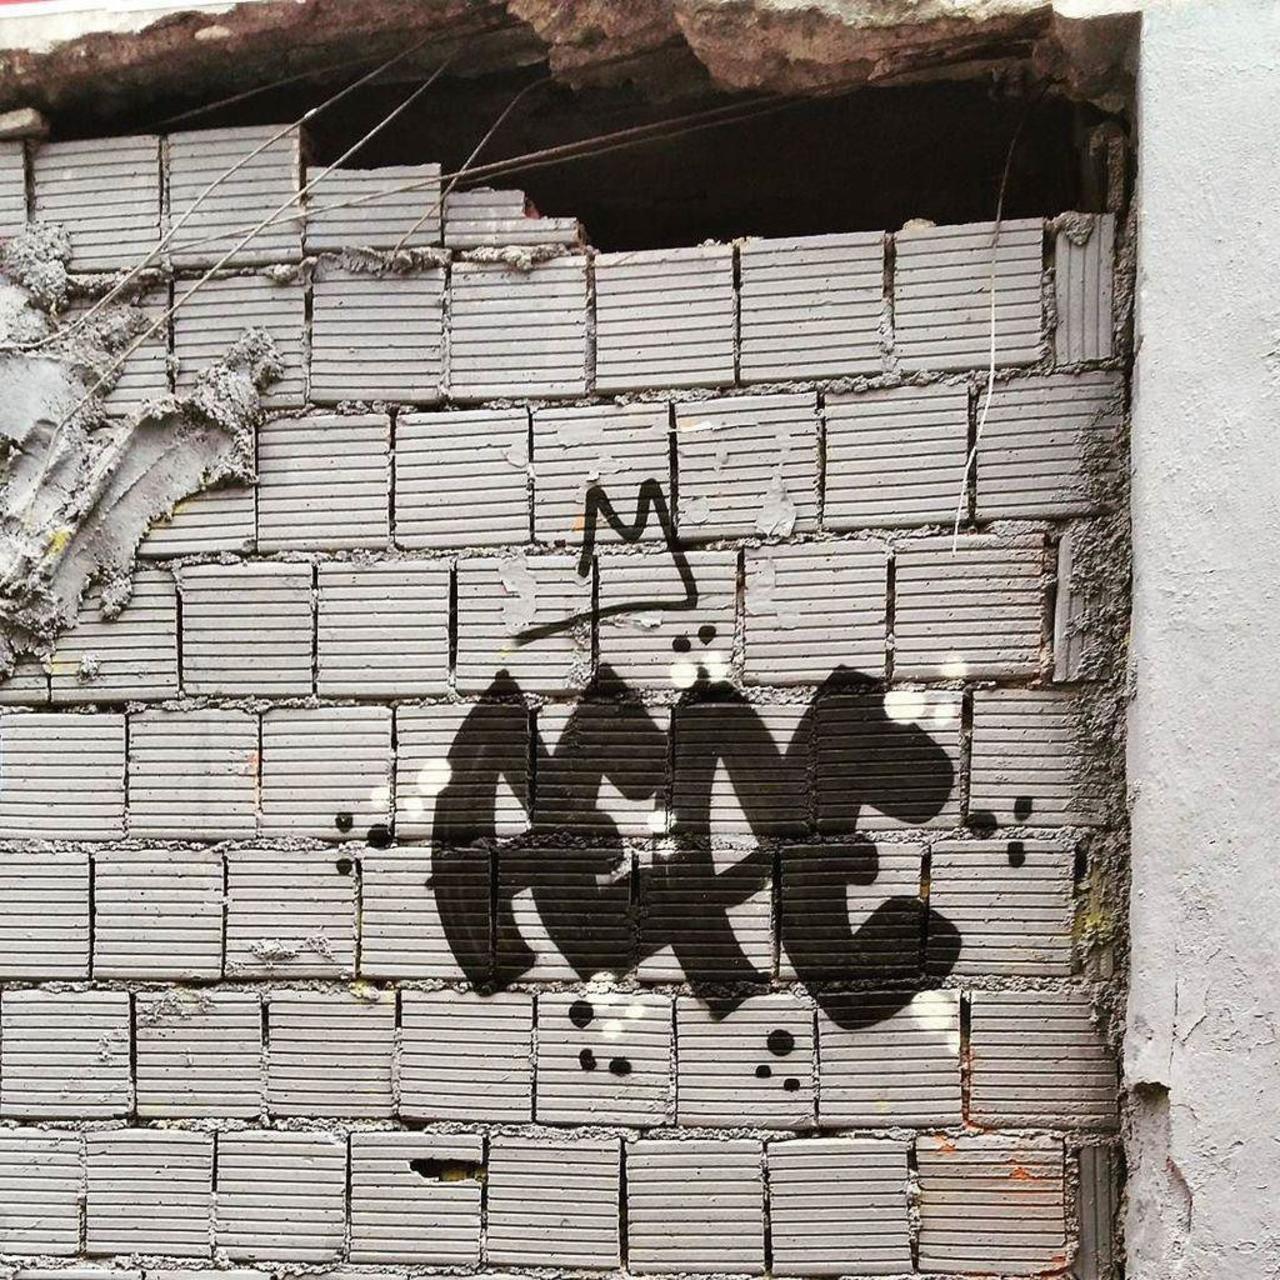 RT @StArtEverywhere: By @pepe_mode_on @dsb_graff #dsb_graff @rsa_graffiti @streetawesome #streetart #urbanart #graffitiart #graffiti #st… http://t.co/sBopo13ZT4